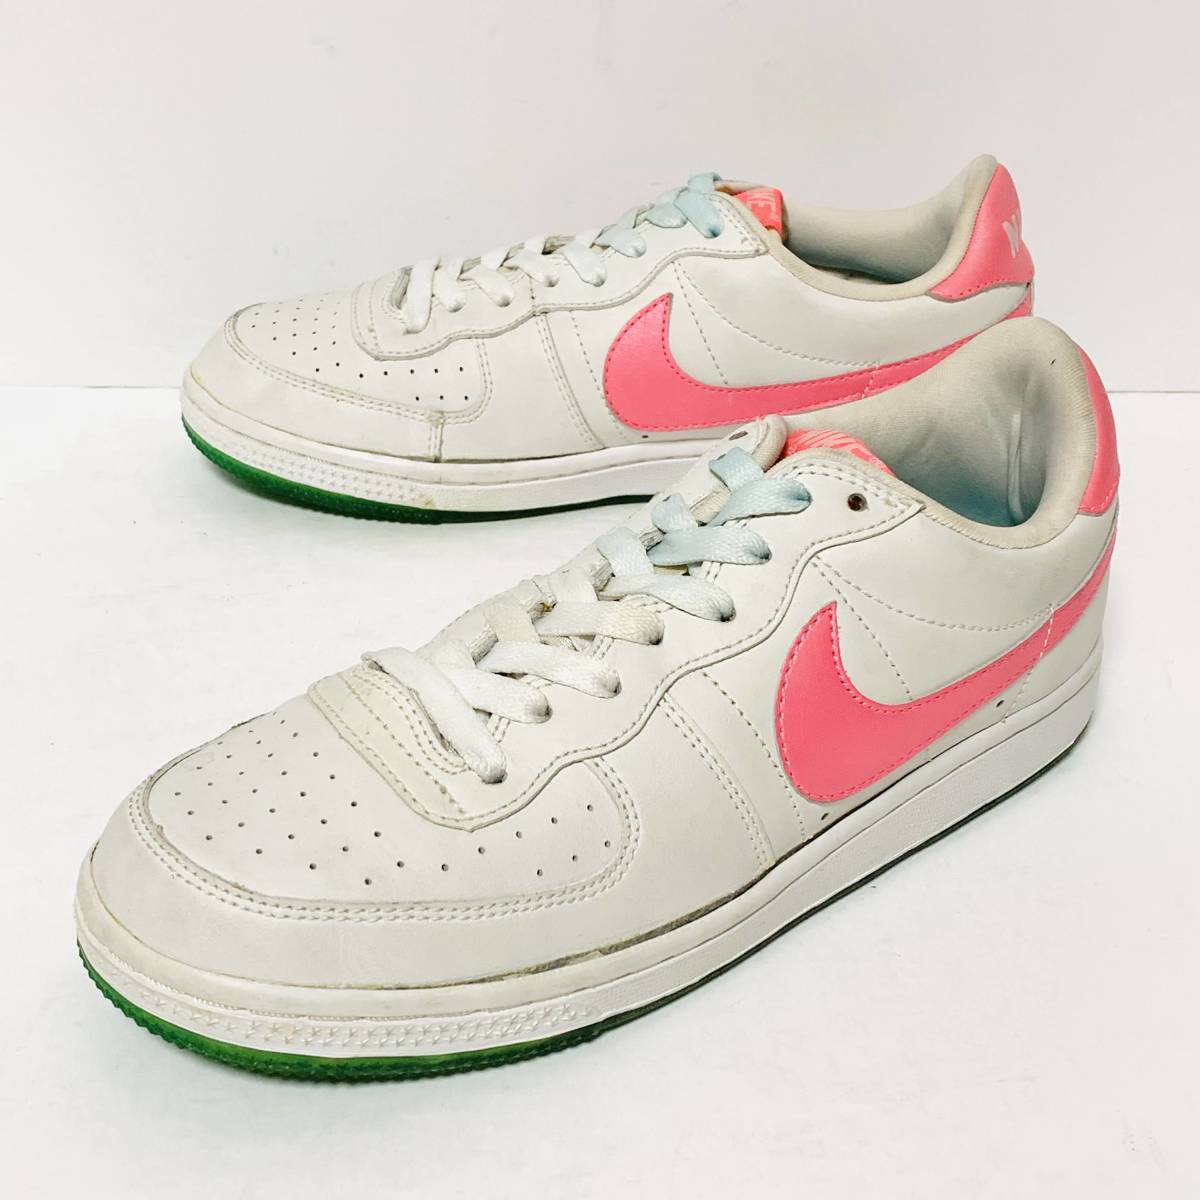 Nike ナイキ ローカット スニーカー コート シューズ 靴 かわいい グラデーション 紐 ホワイト ピンク レディース サイズ 24 0cm 1594gg